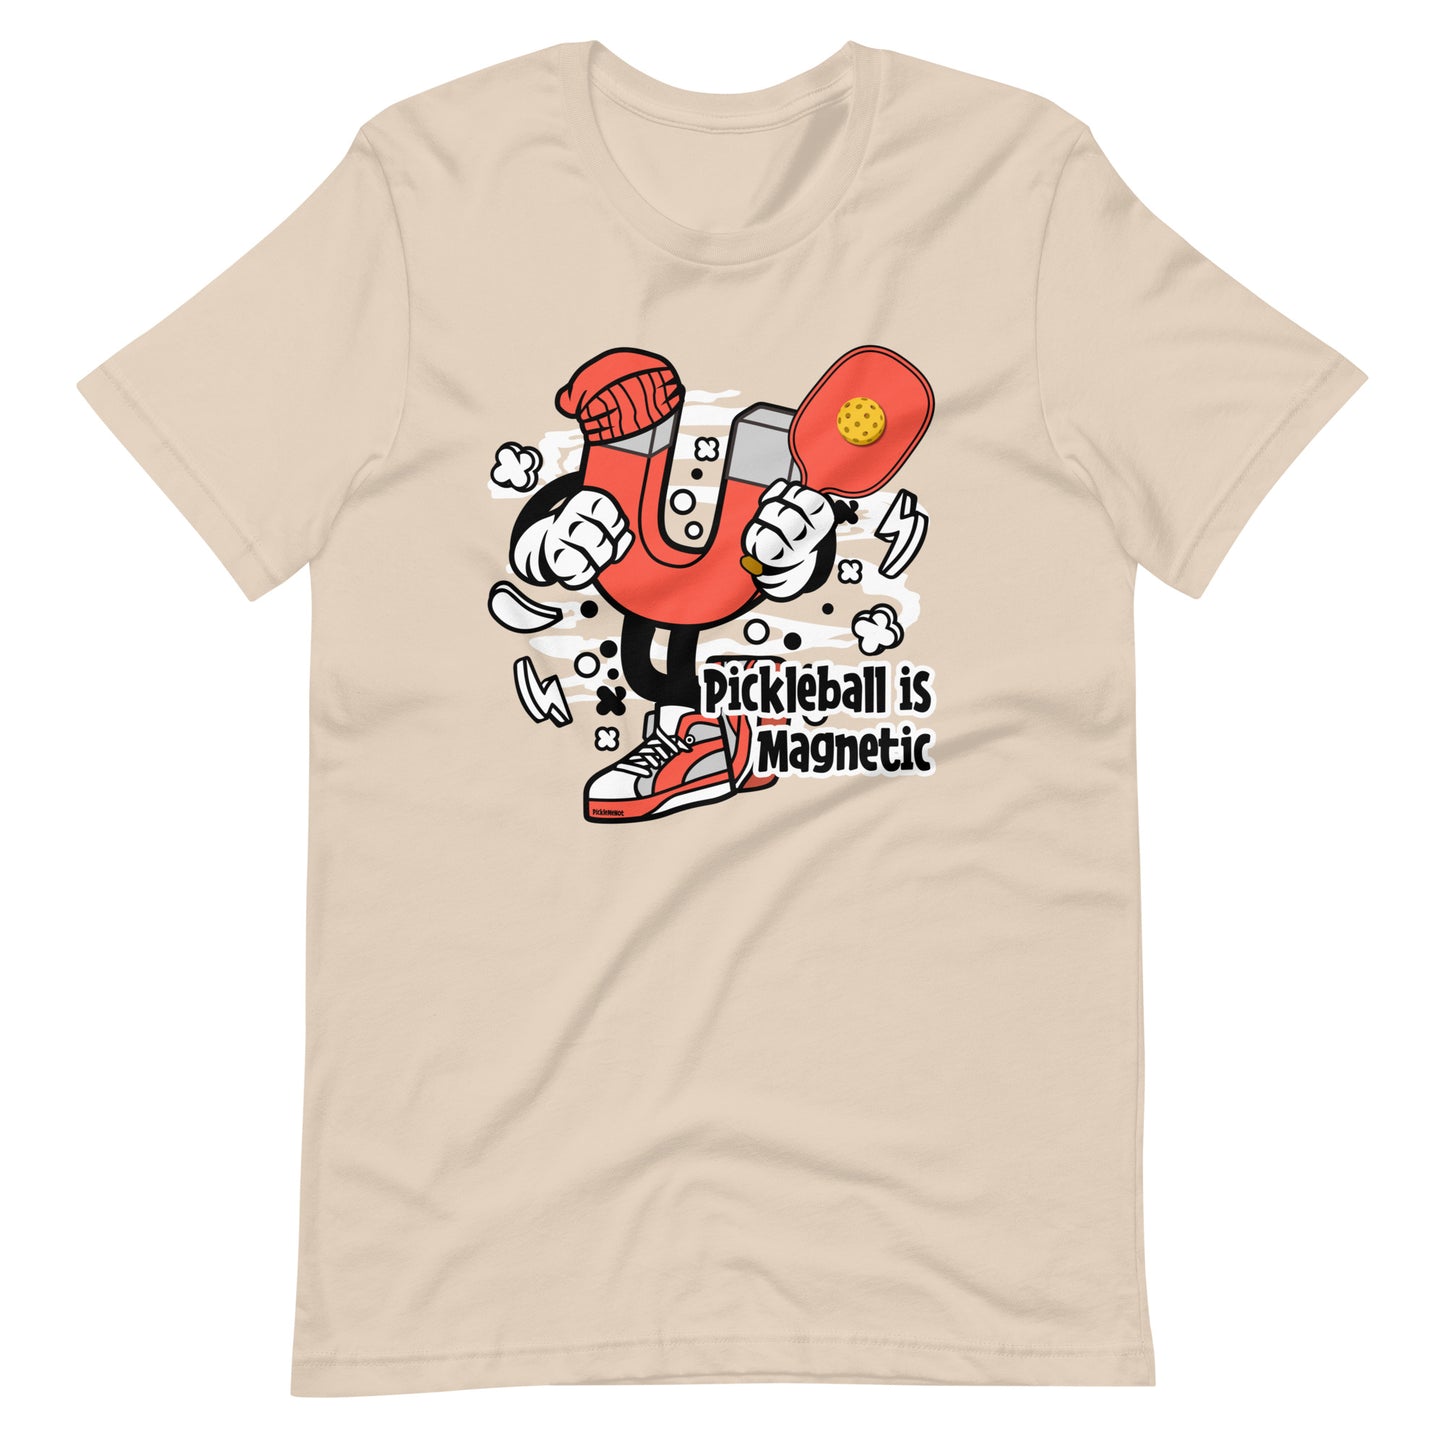 Retro-Vintage Fun Pickleball , "Pickleball is Magnetic" Unisex Women's Soft Cream T-Shirt